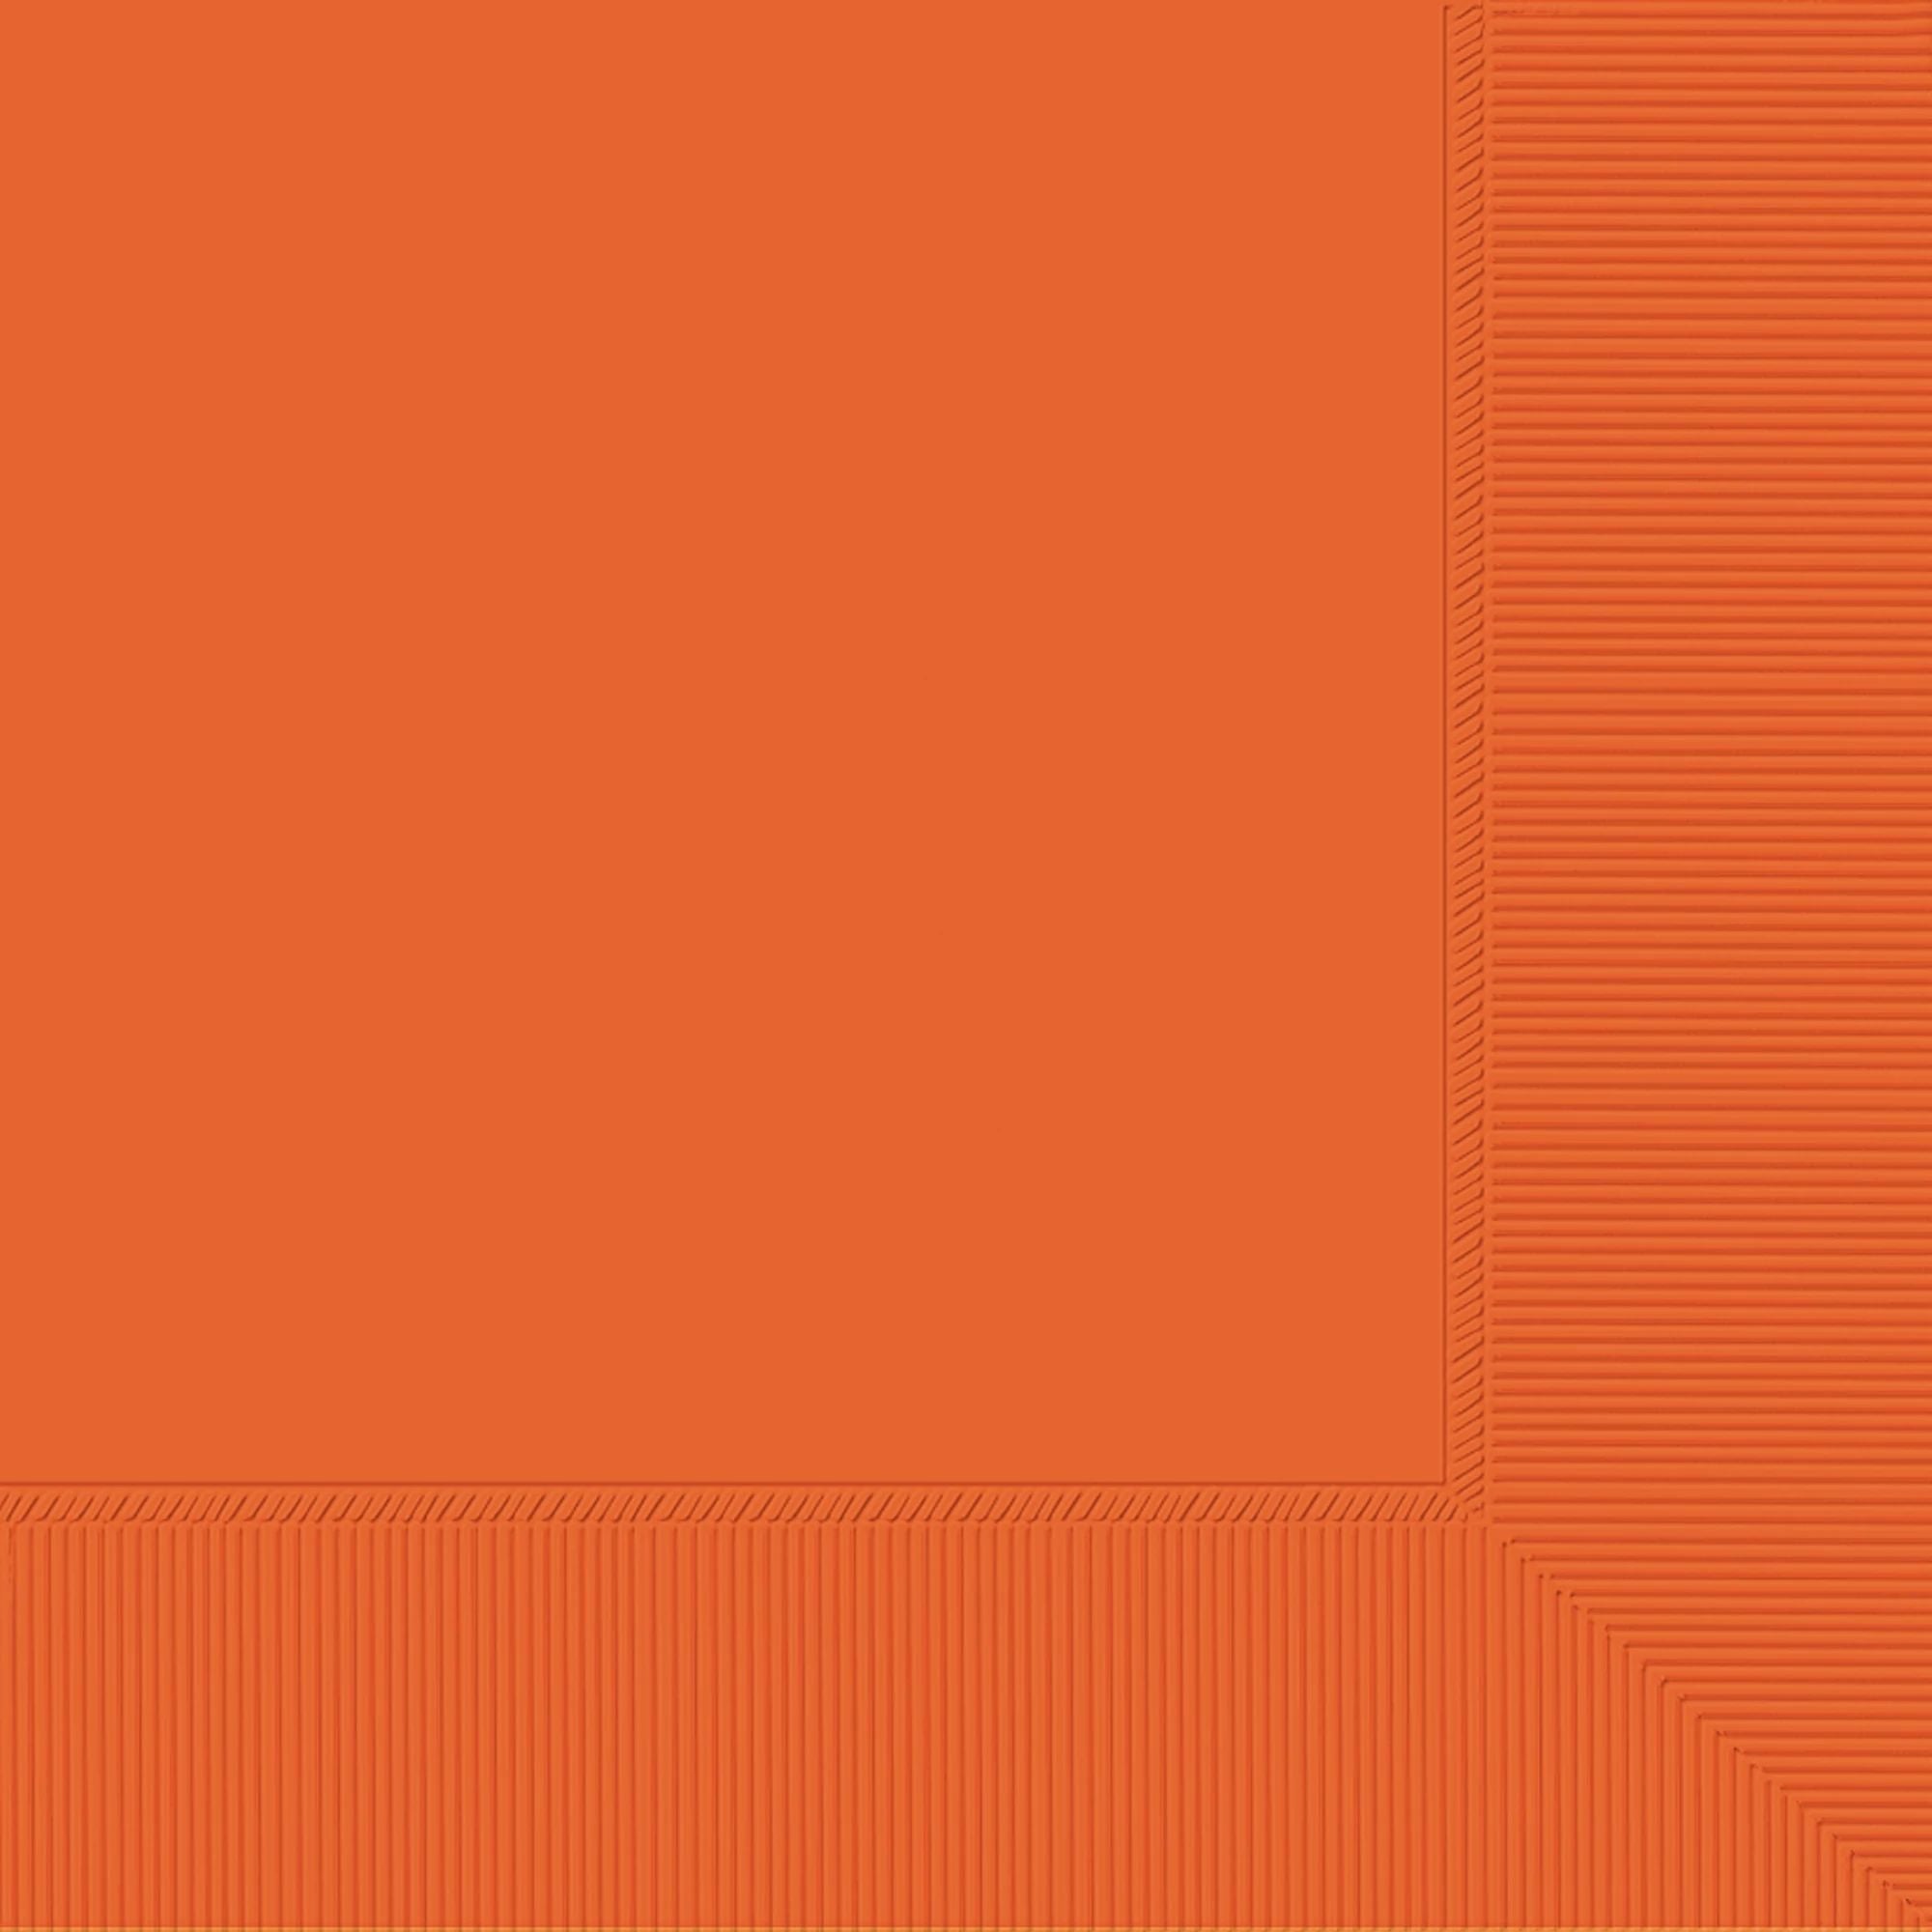 9 7/8" Beverage Napkins - Orange Peel - 40CT